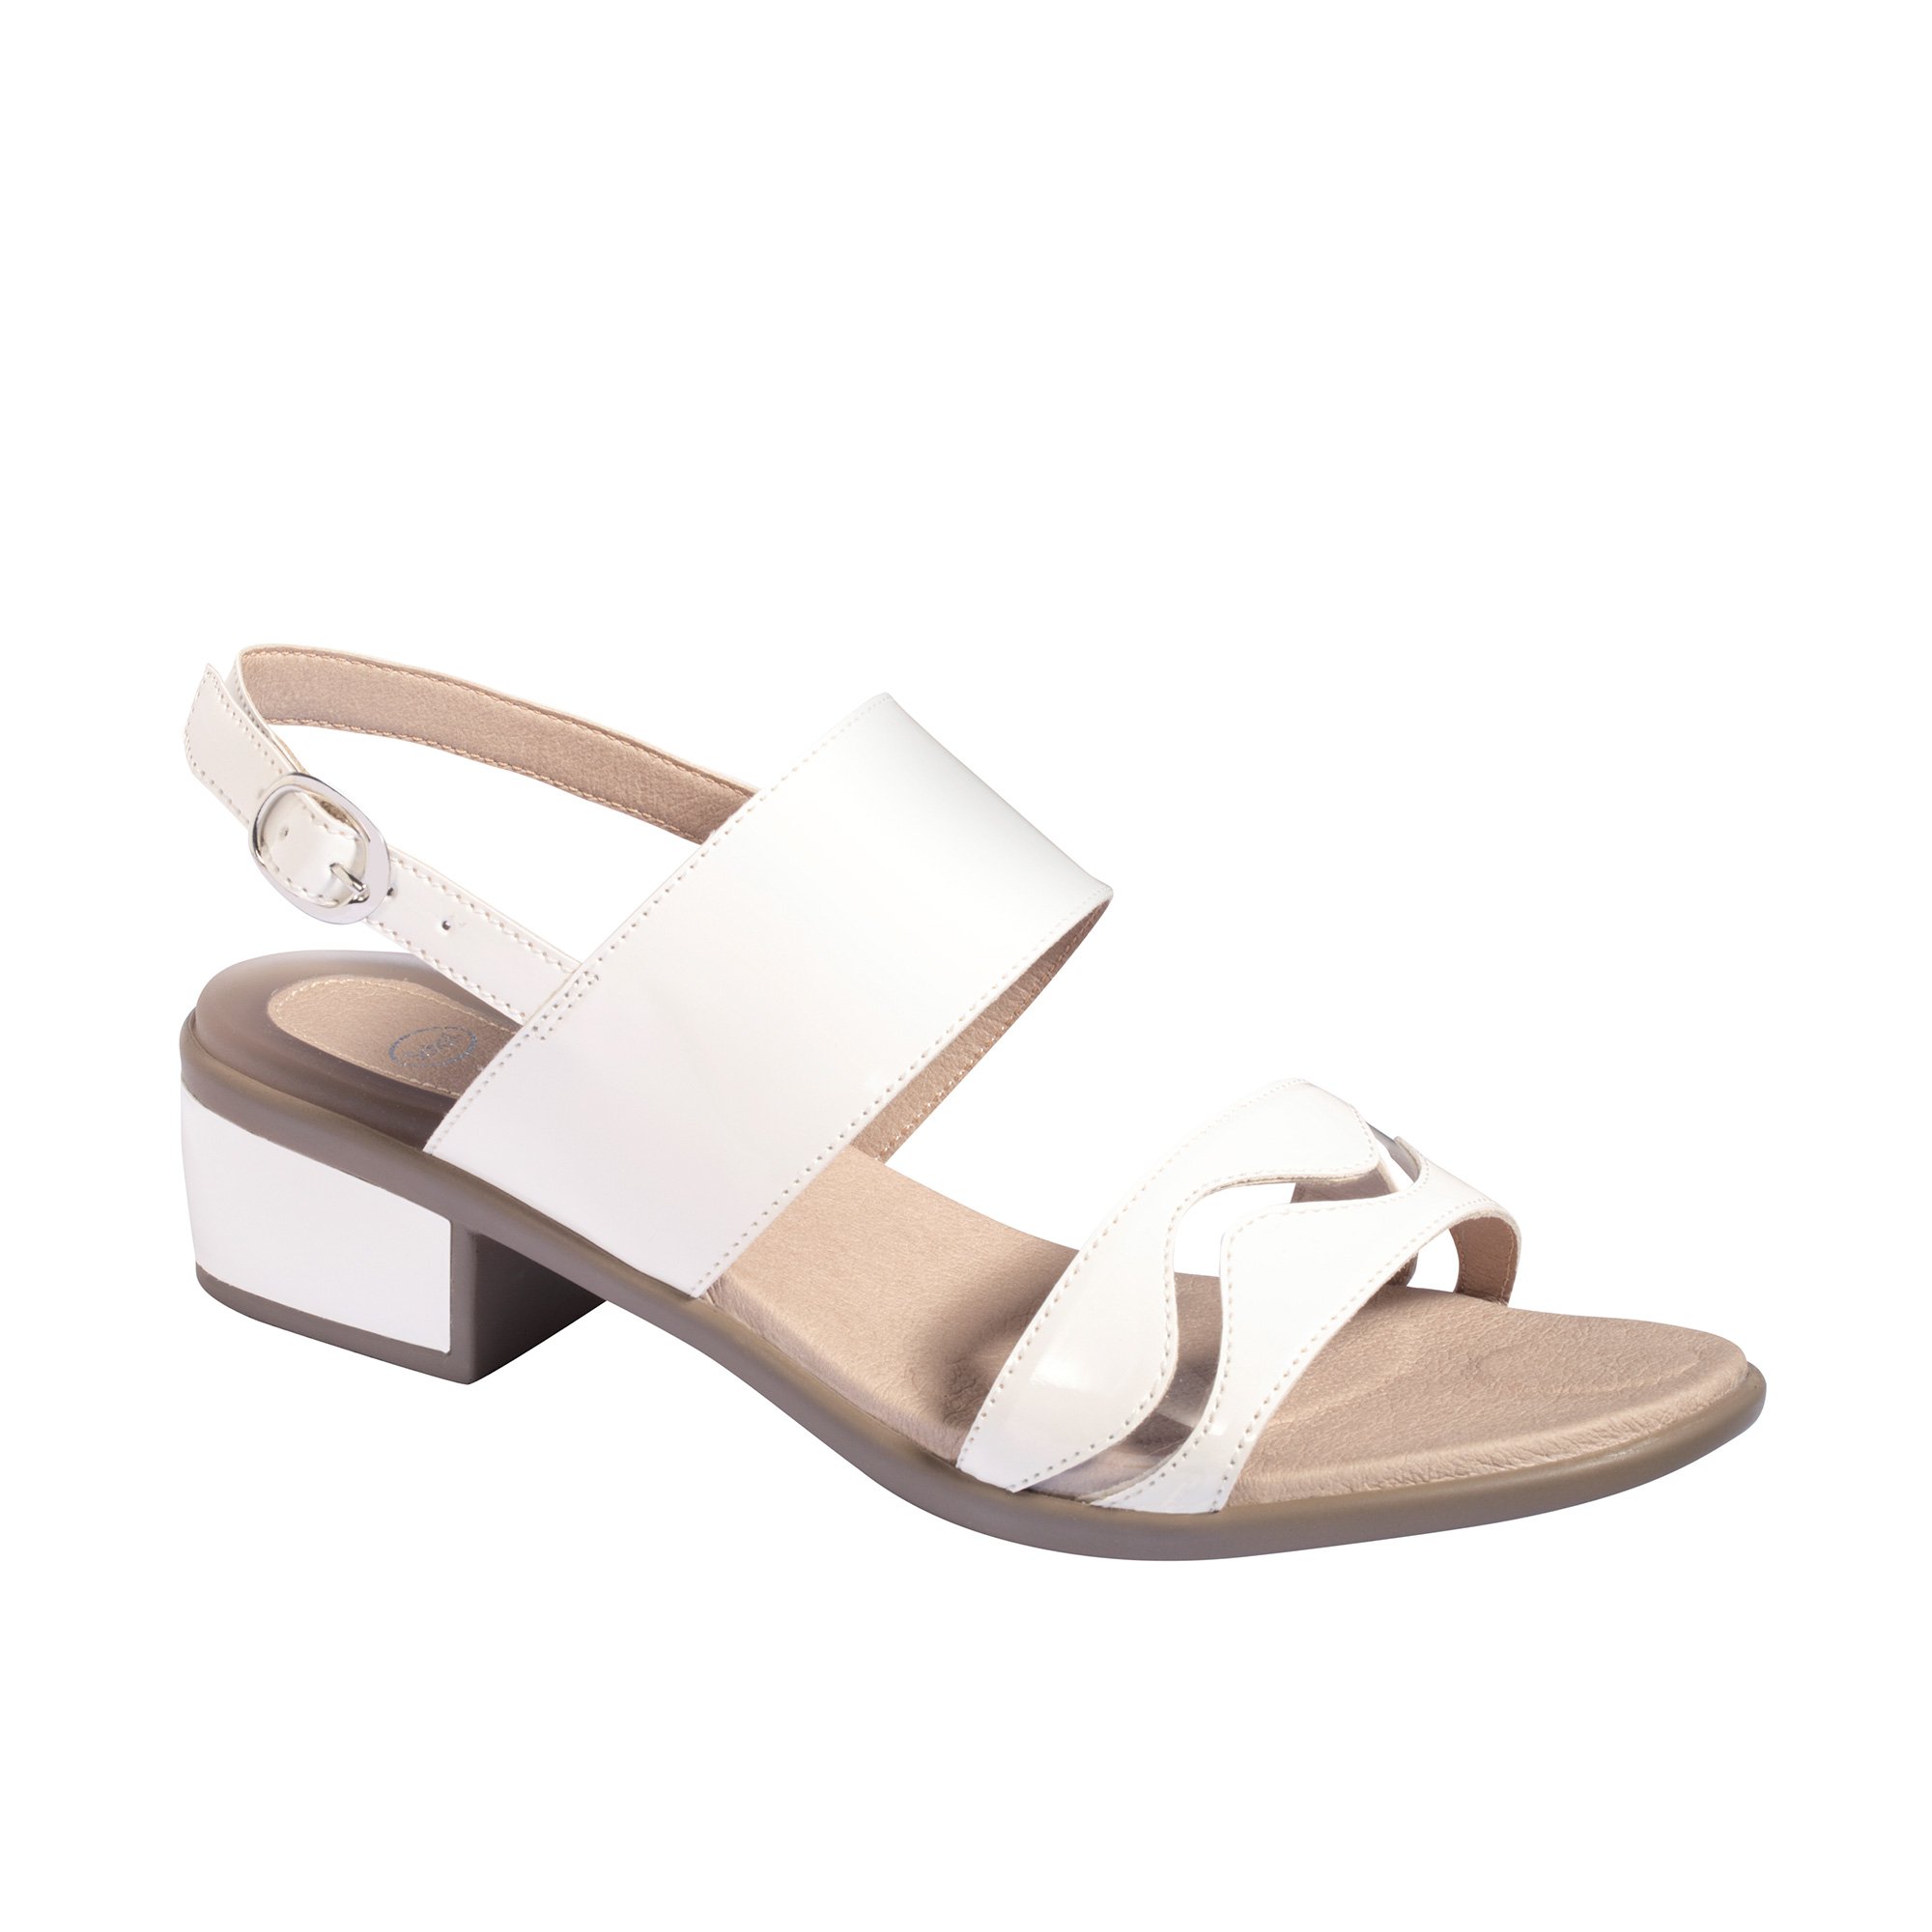 Koi Sandal Scholl(R) Sandalo Donna Gelactiv(R) Bianco Misura 36